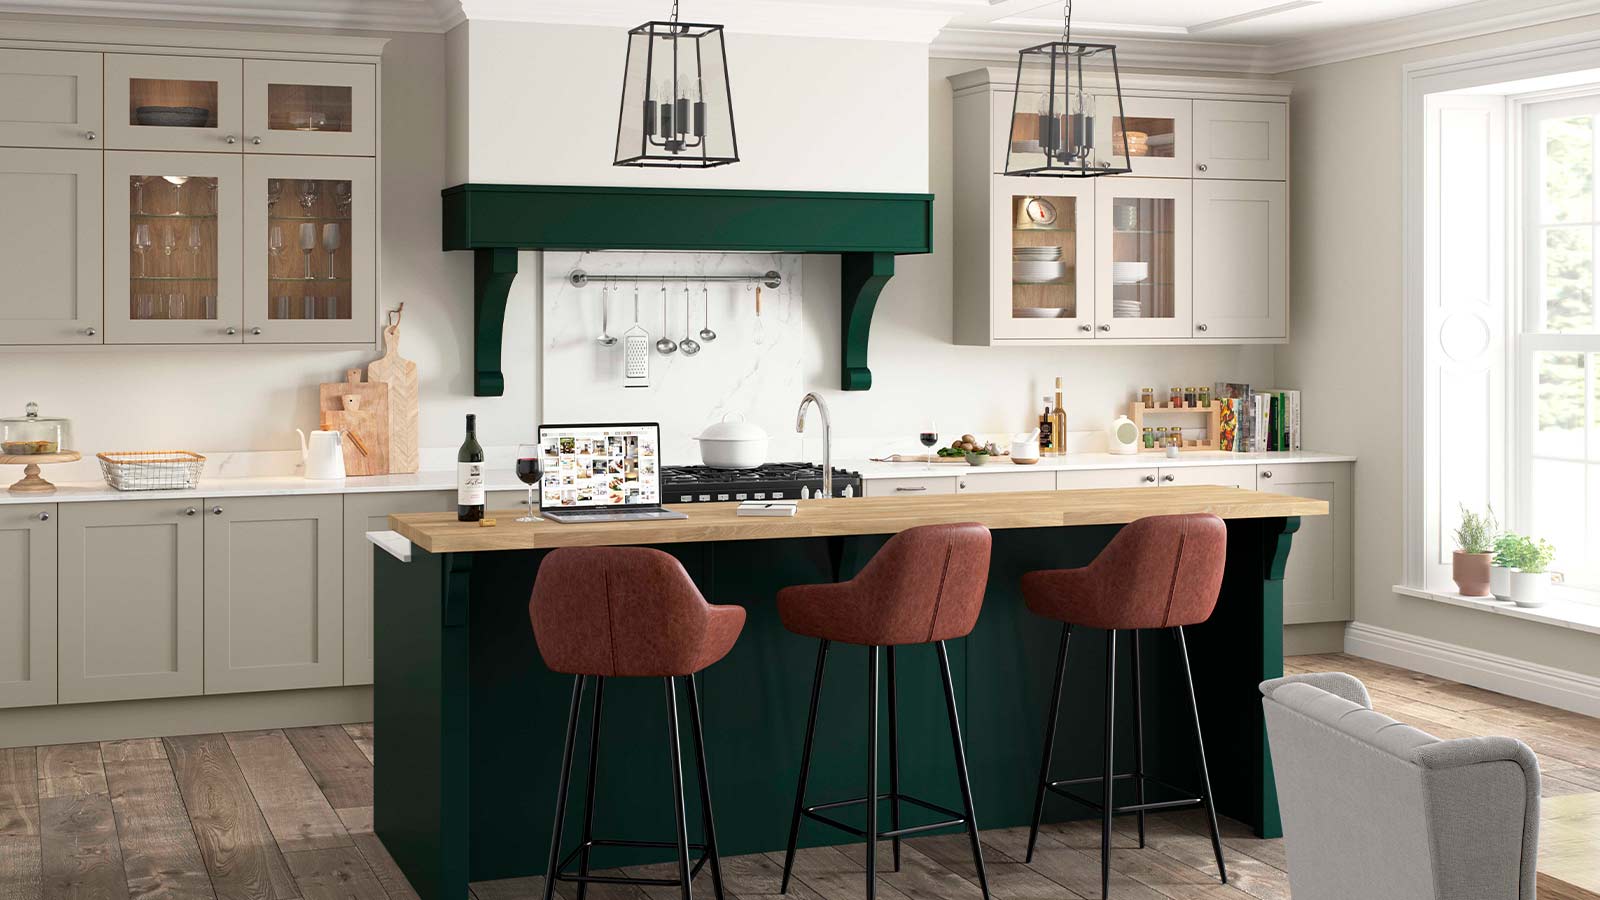 A grey shaker kitchen featuring green kitchen island